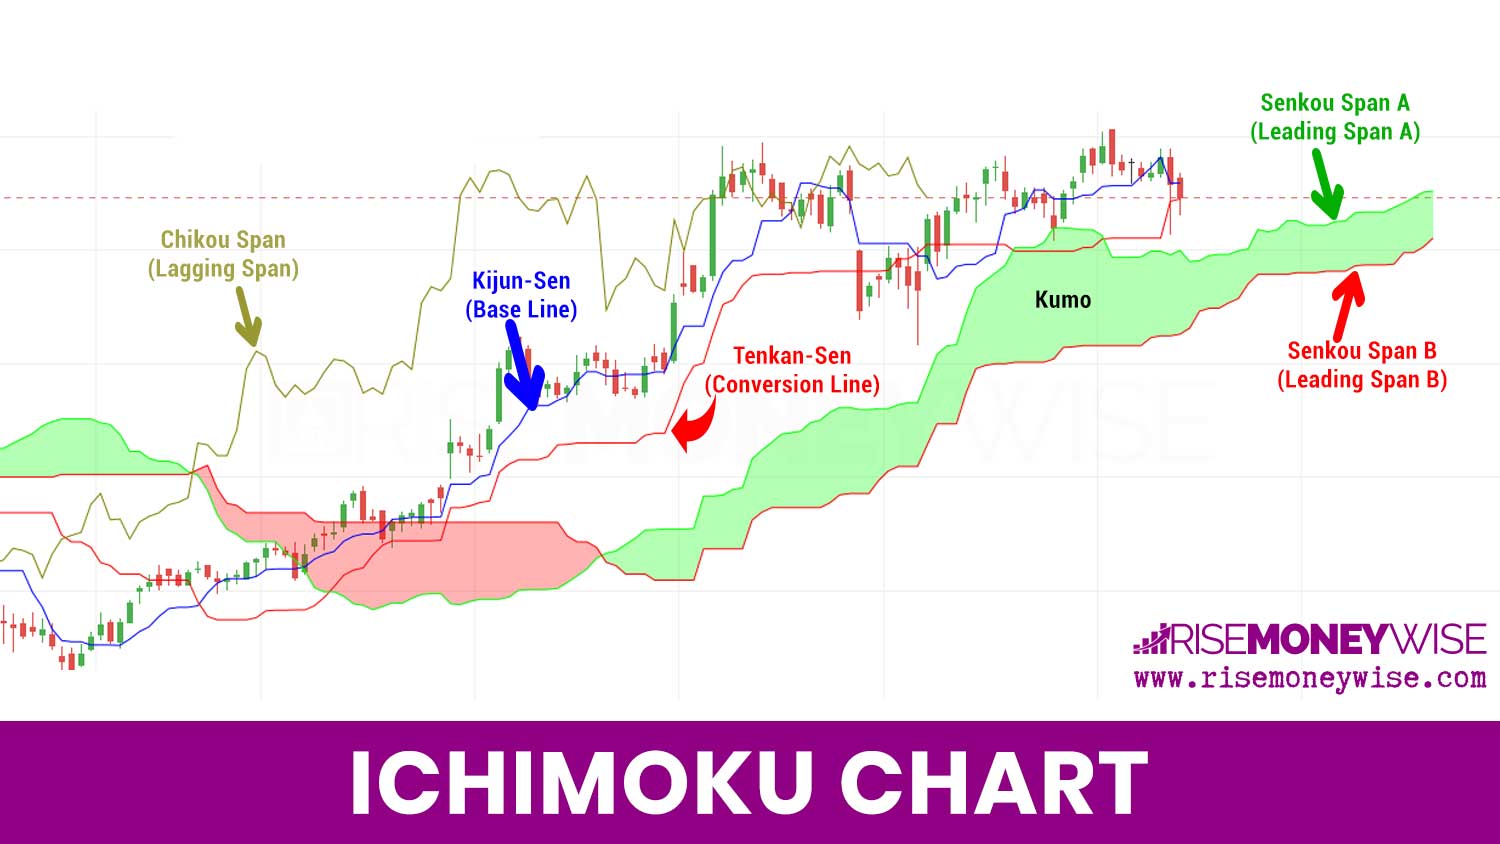 an ichimoku cloud chart showing its major components